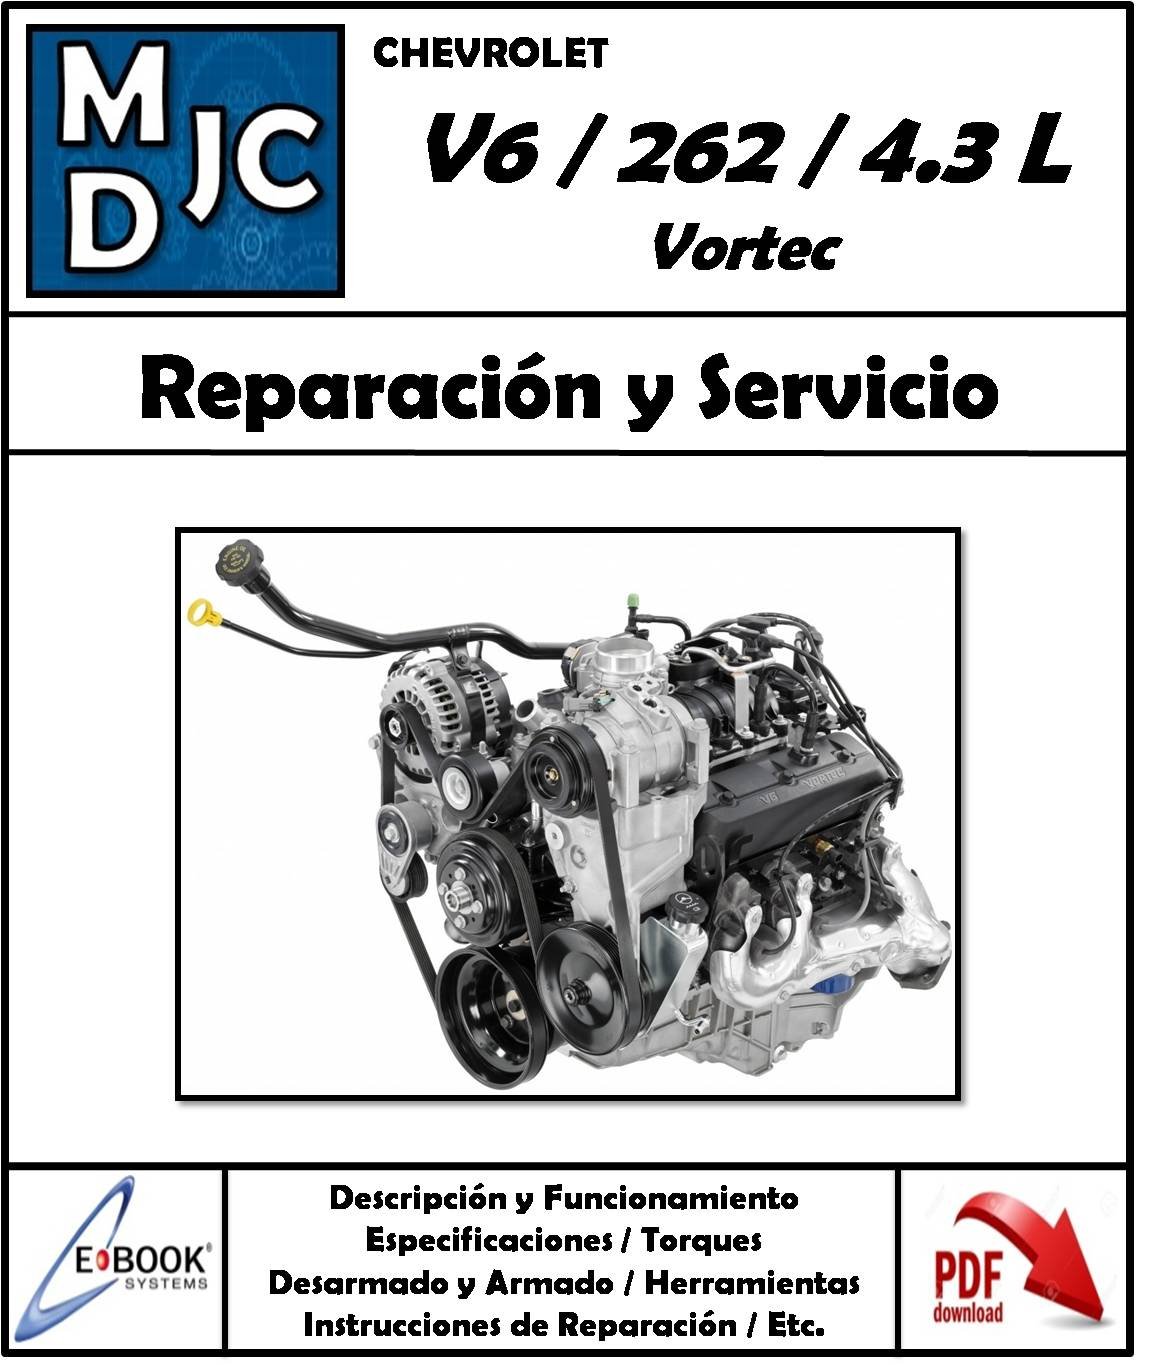 Chevrolet Motor V6 262 Vortec 4.3 L (Español)